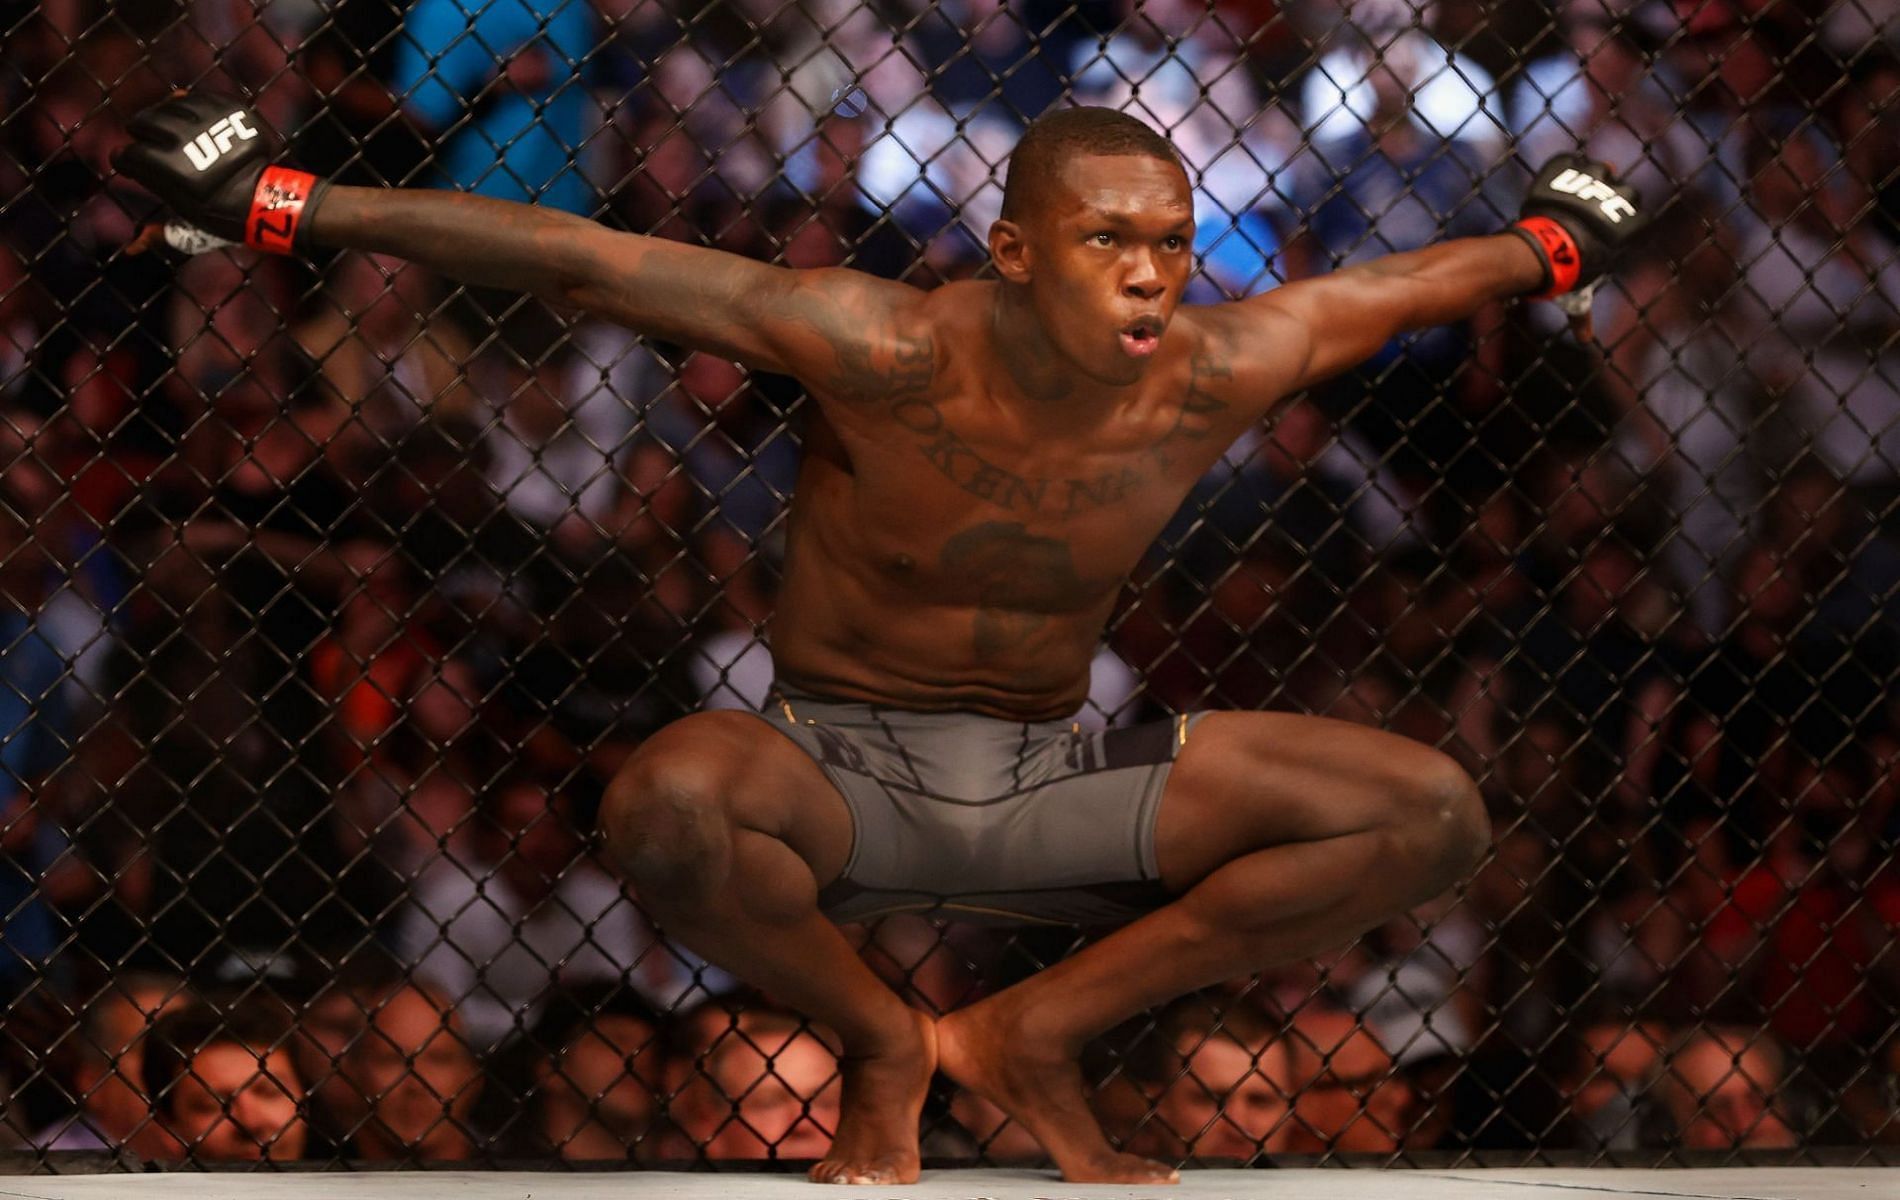 Israel Adesanya hit his signature pose at UFC 263.